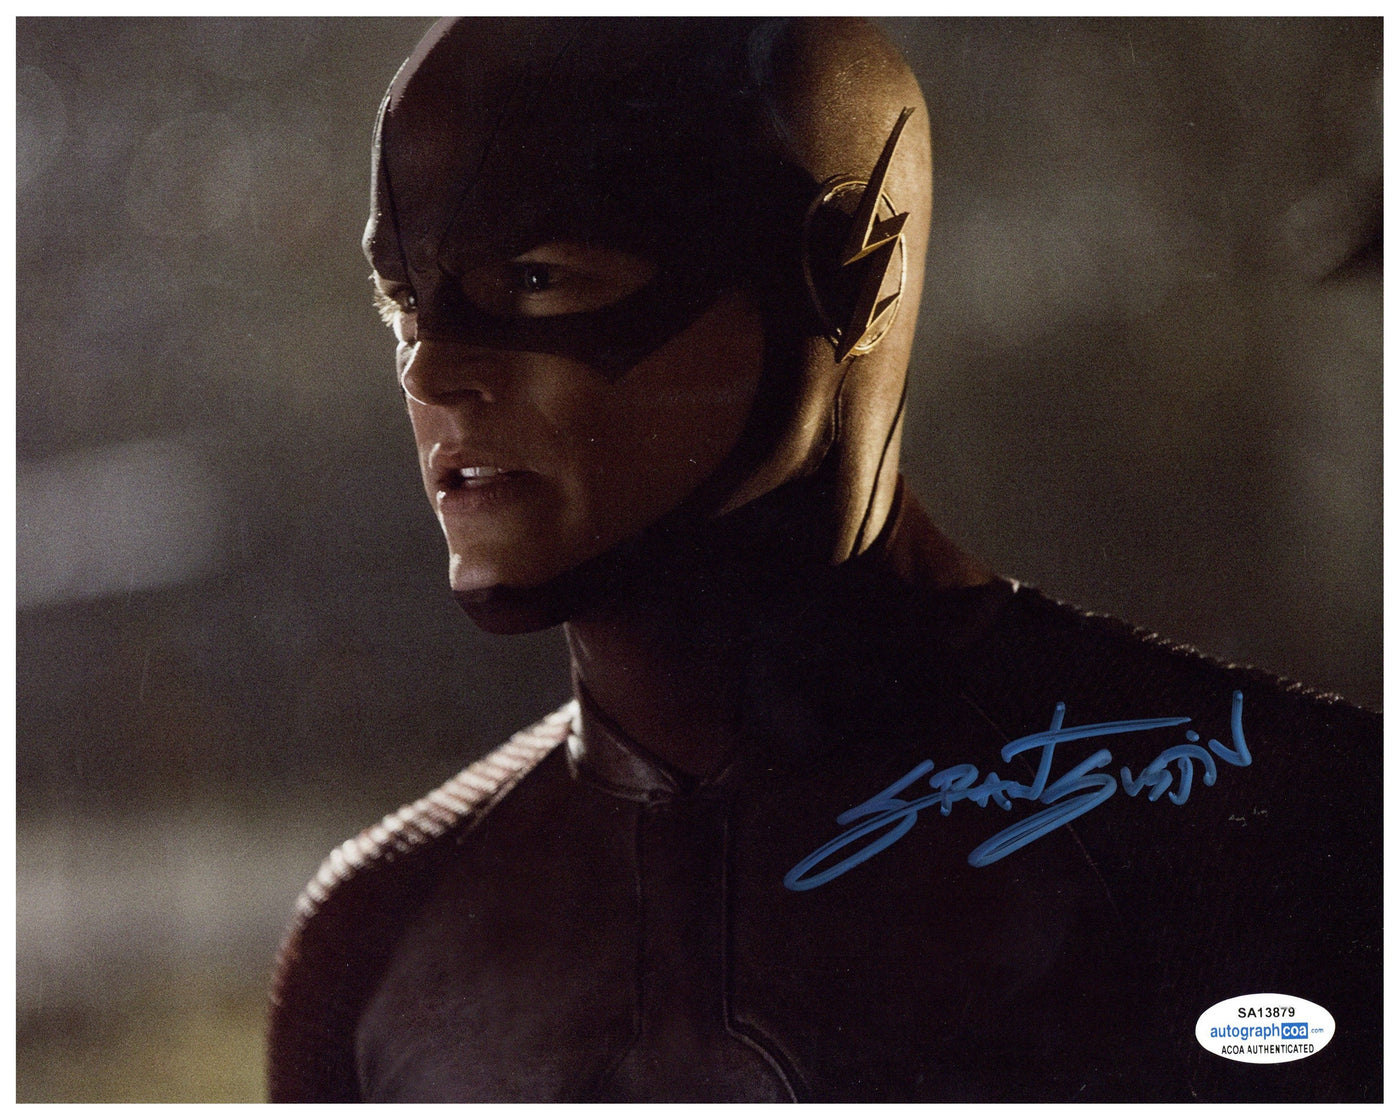 Grant Gustin Signed 8x10 Photo Flash Autographed AutographCOA